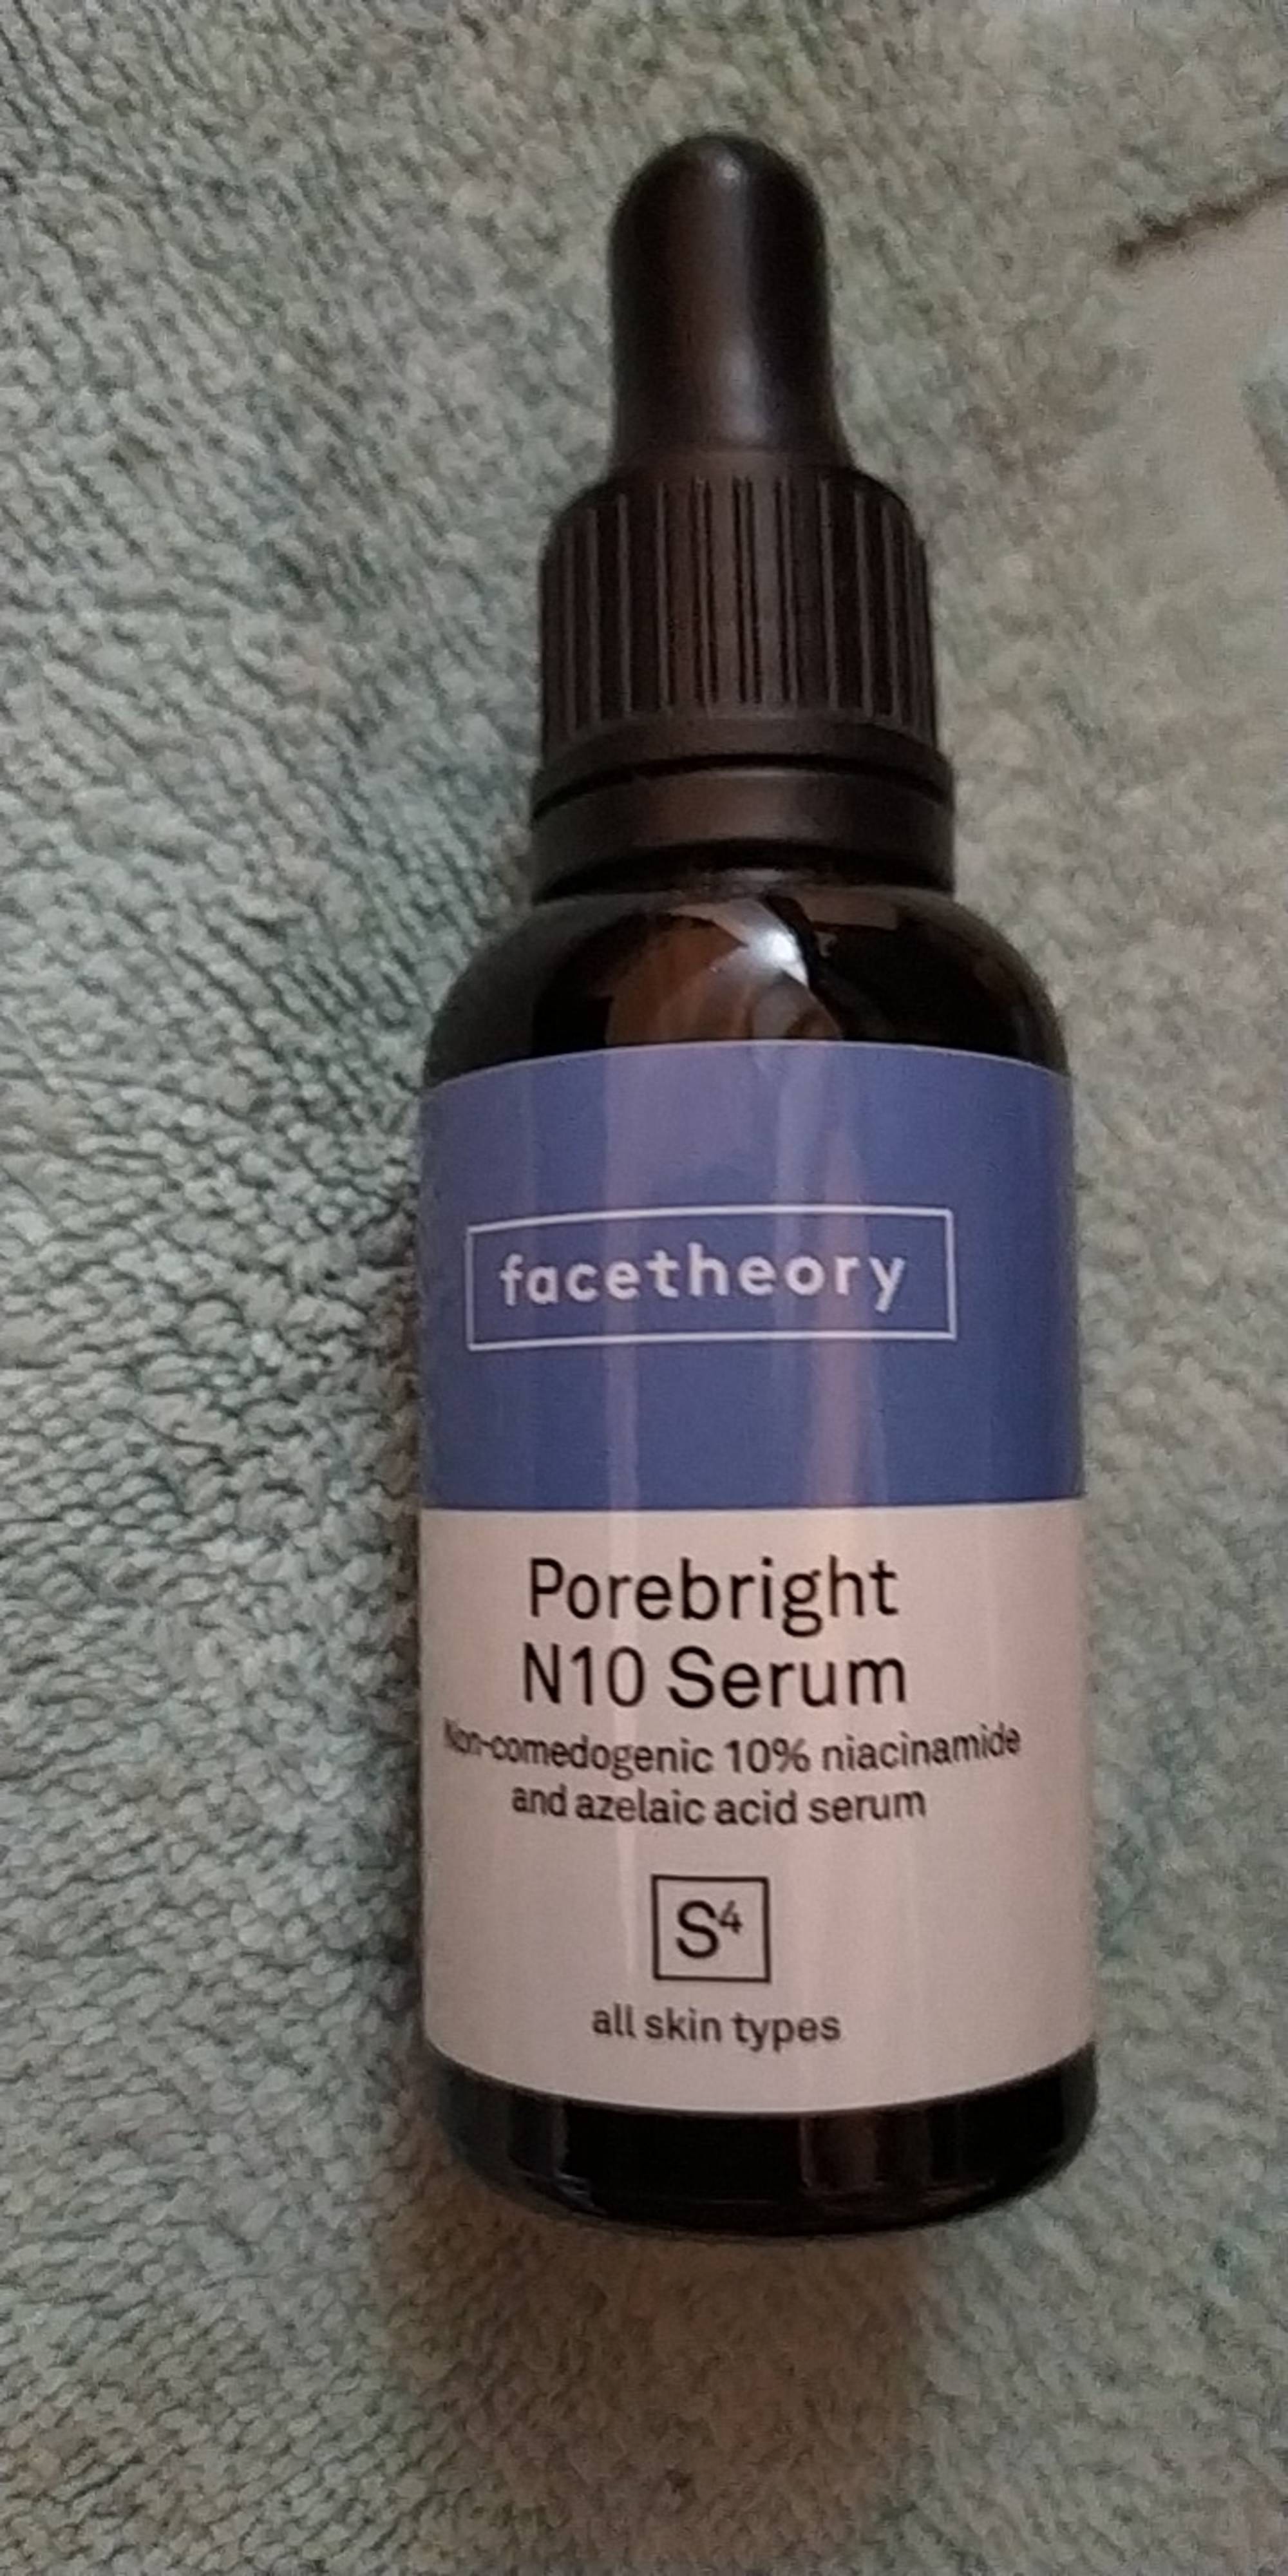 FACETHEORY - Porebright N10 serum